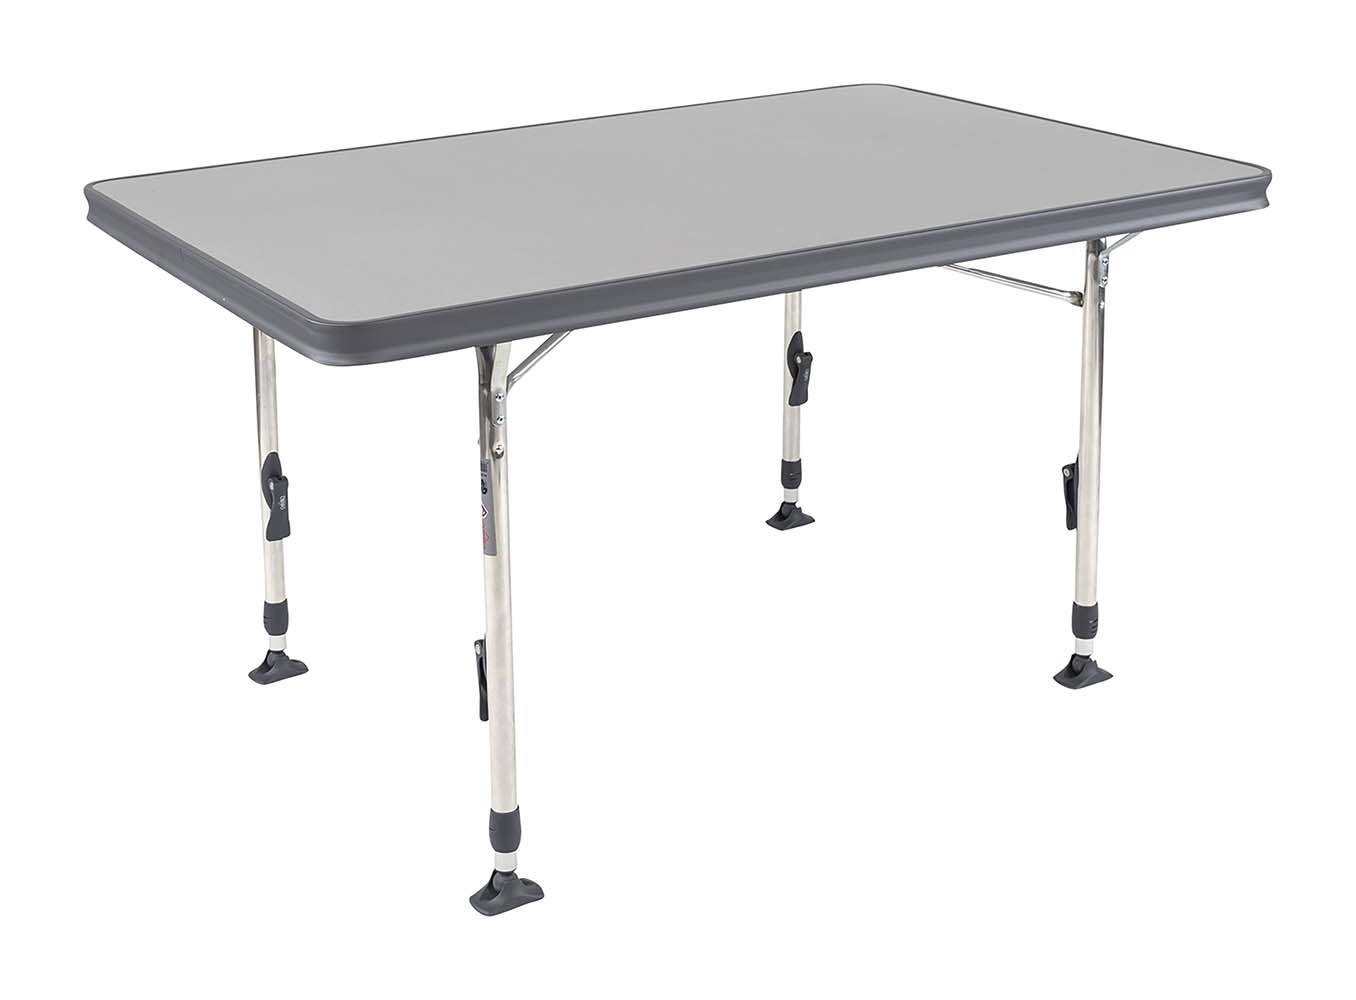 Crespo - Table - AL/247 - 110x70 cm - Grey detail 2